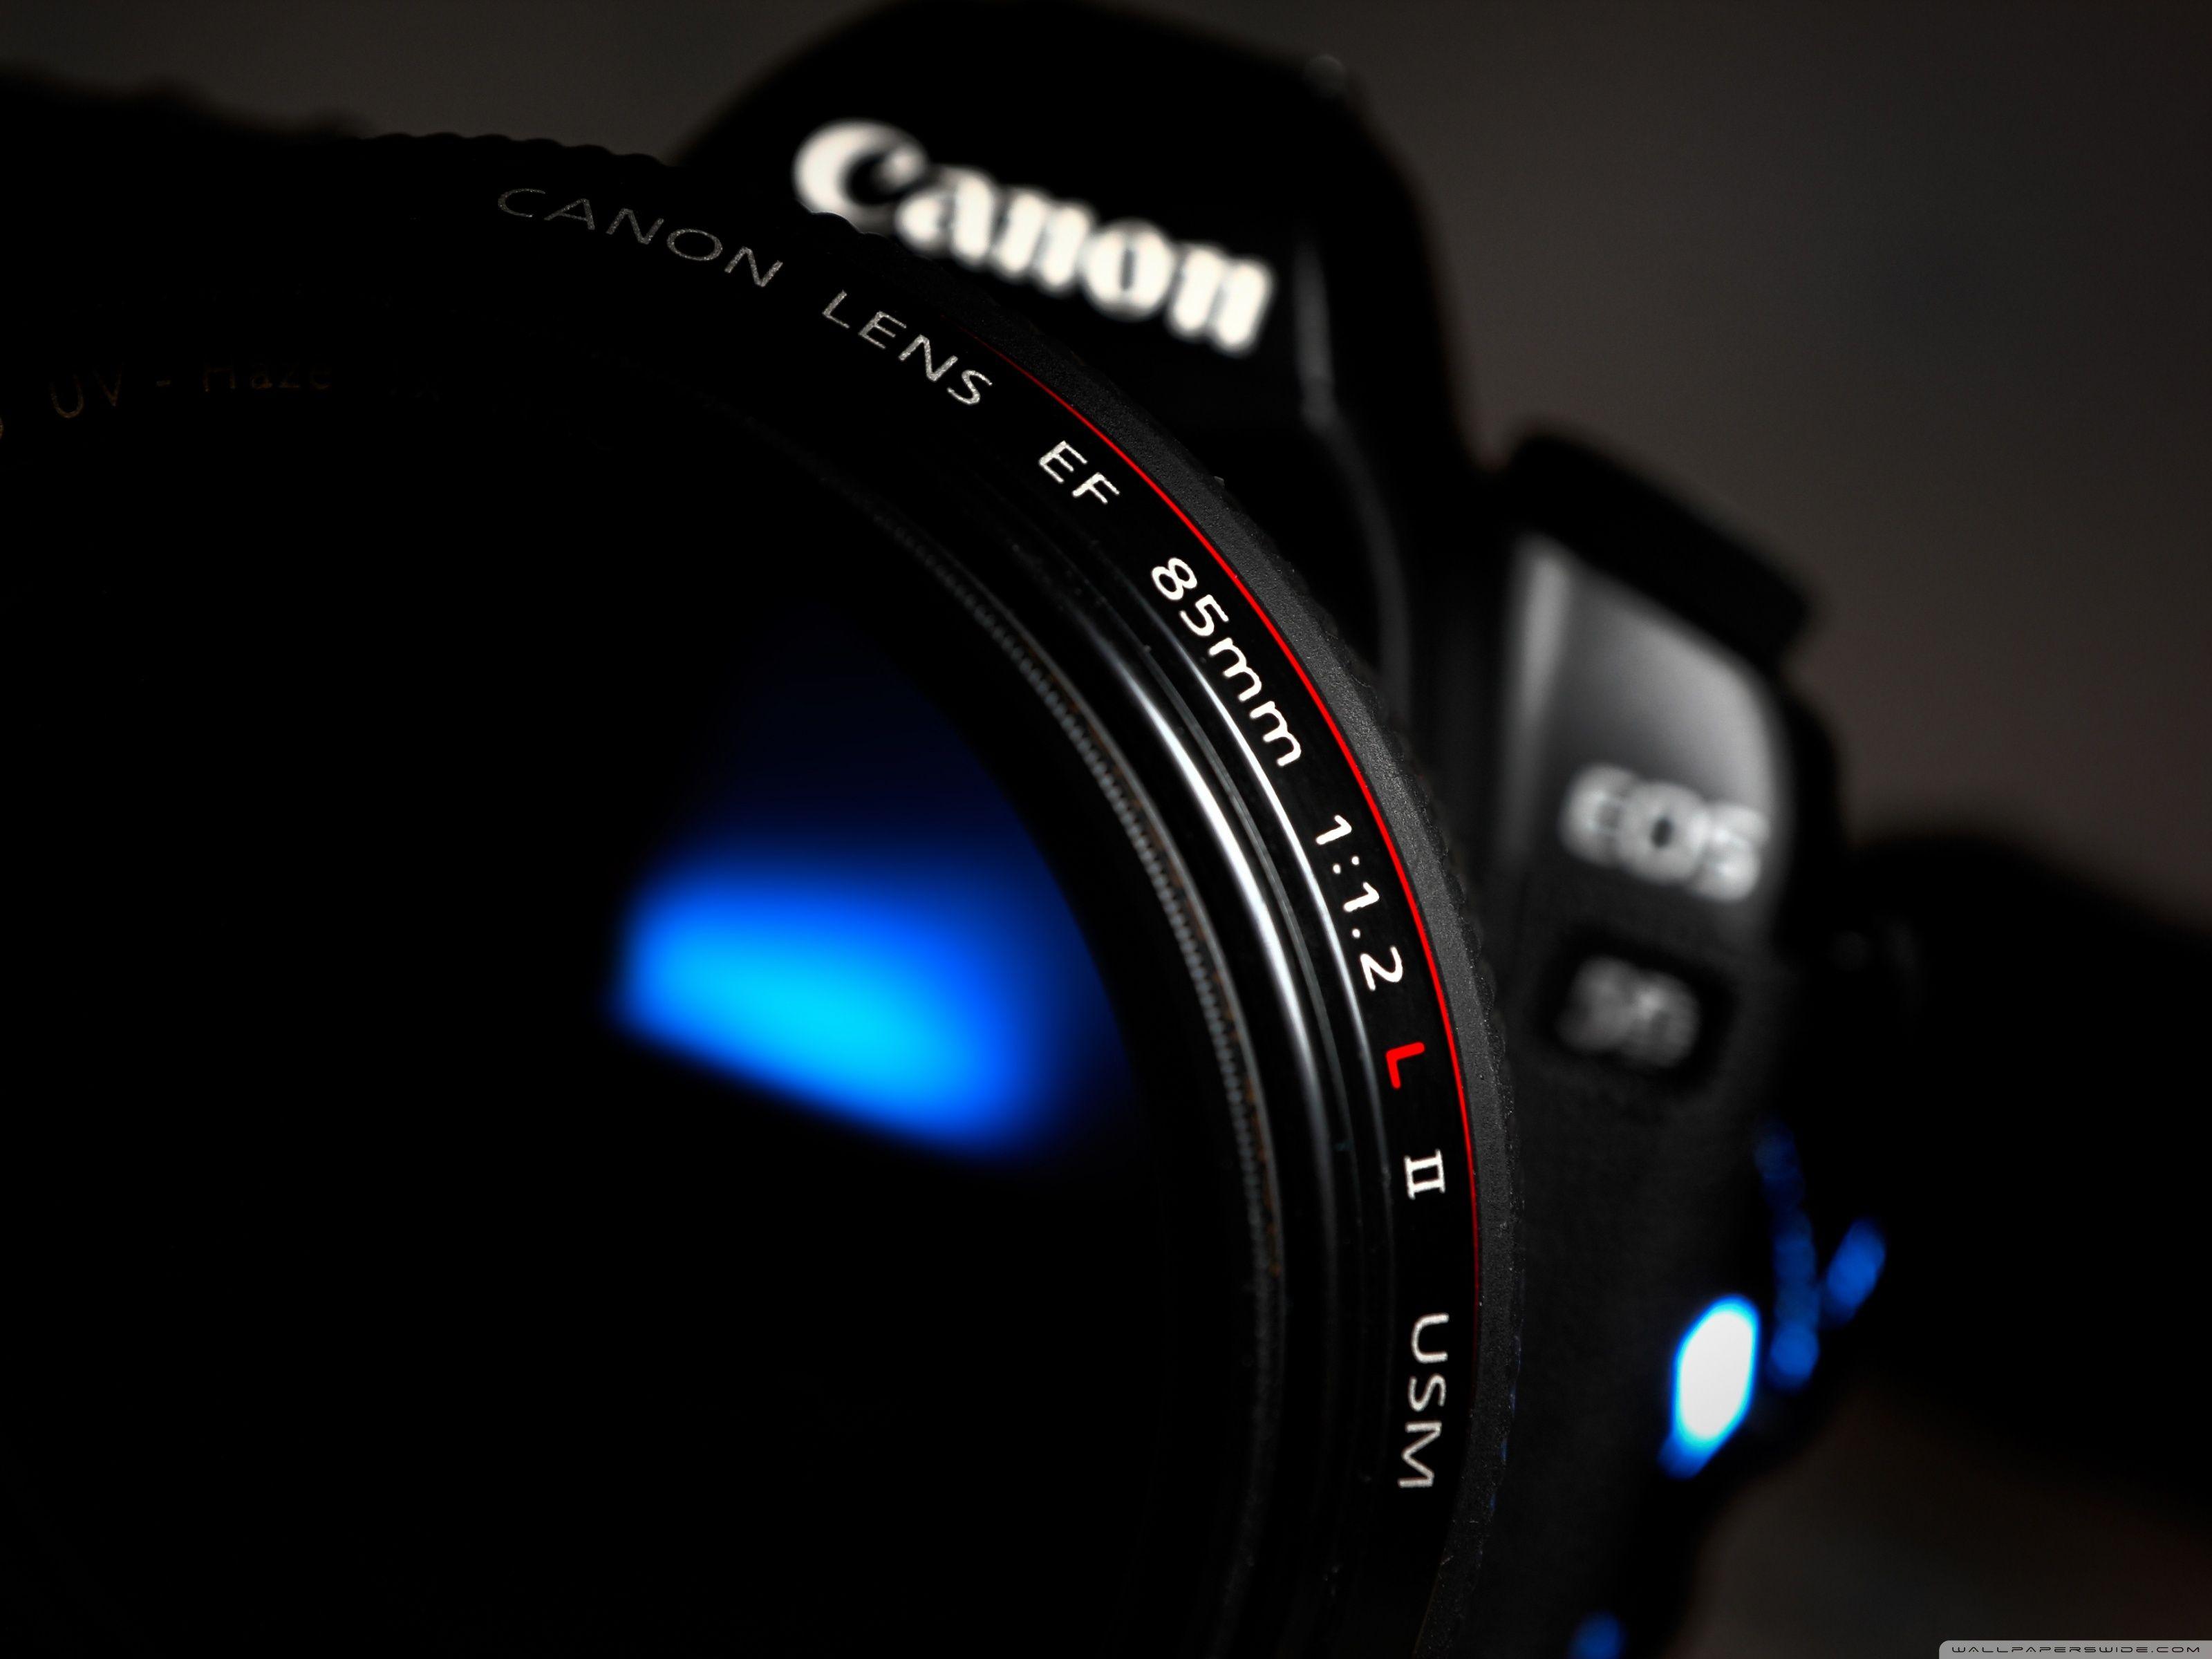 Canon Lens HD desktop wallpaper, Widescreen, High Definition